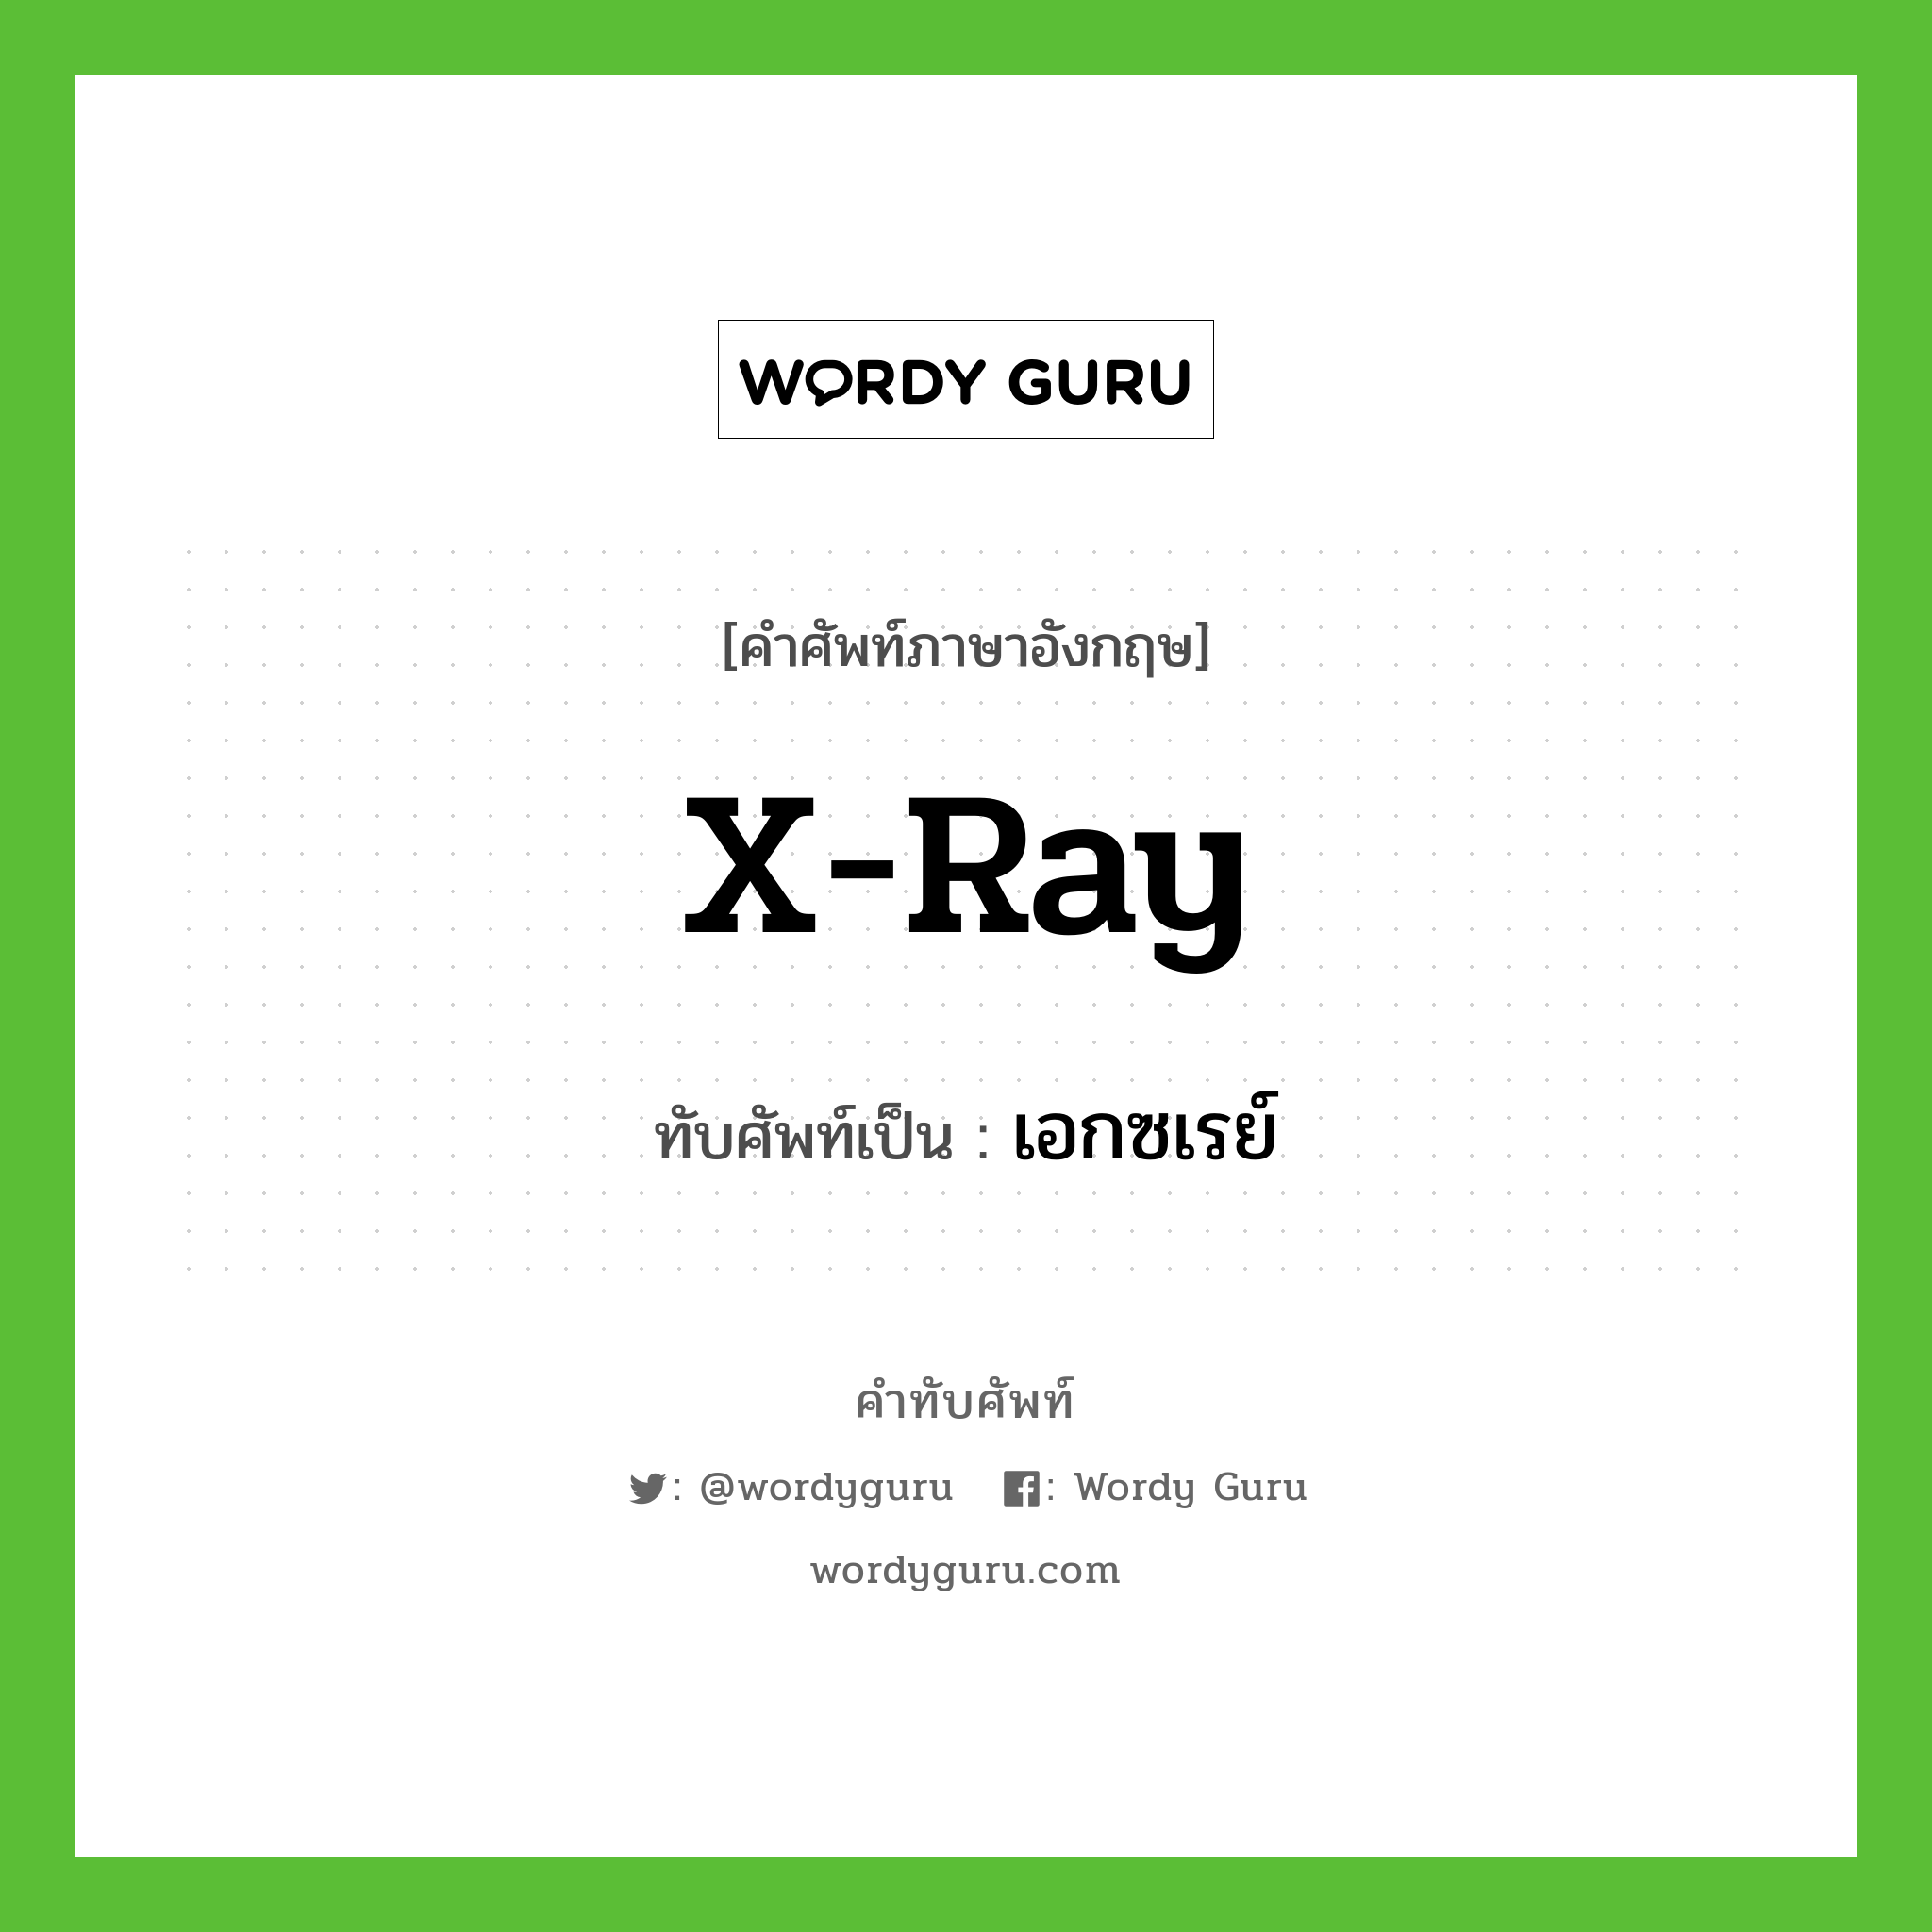 x-ray เขียนเป็นคำไทยว่าอะไร?, คำศัพท์ภาษาอังกฤษ x-ray ทับศัพท์เป็น เอกซเรย์